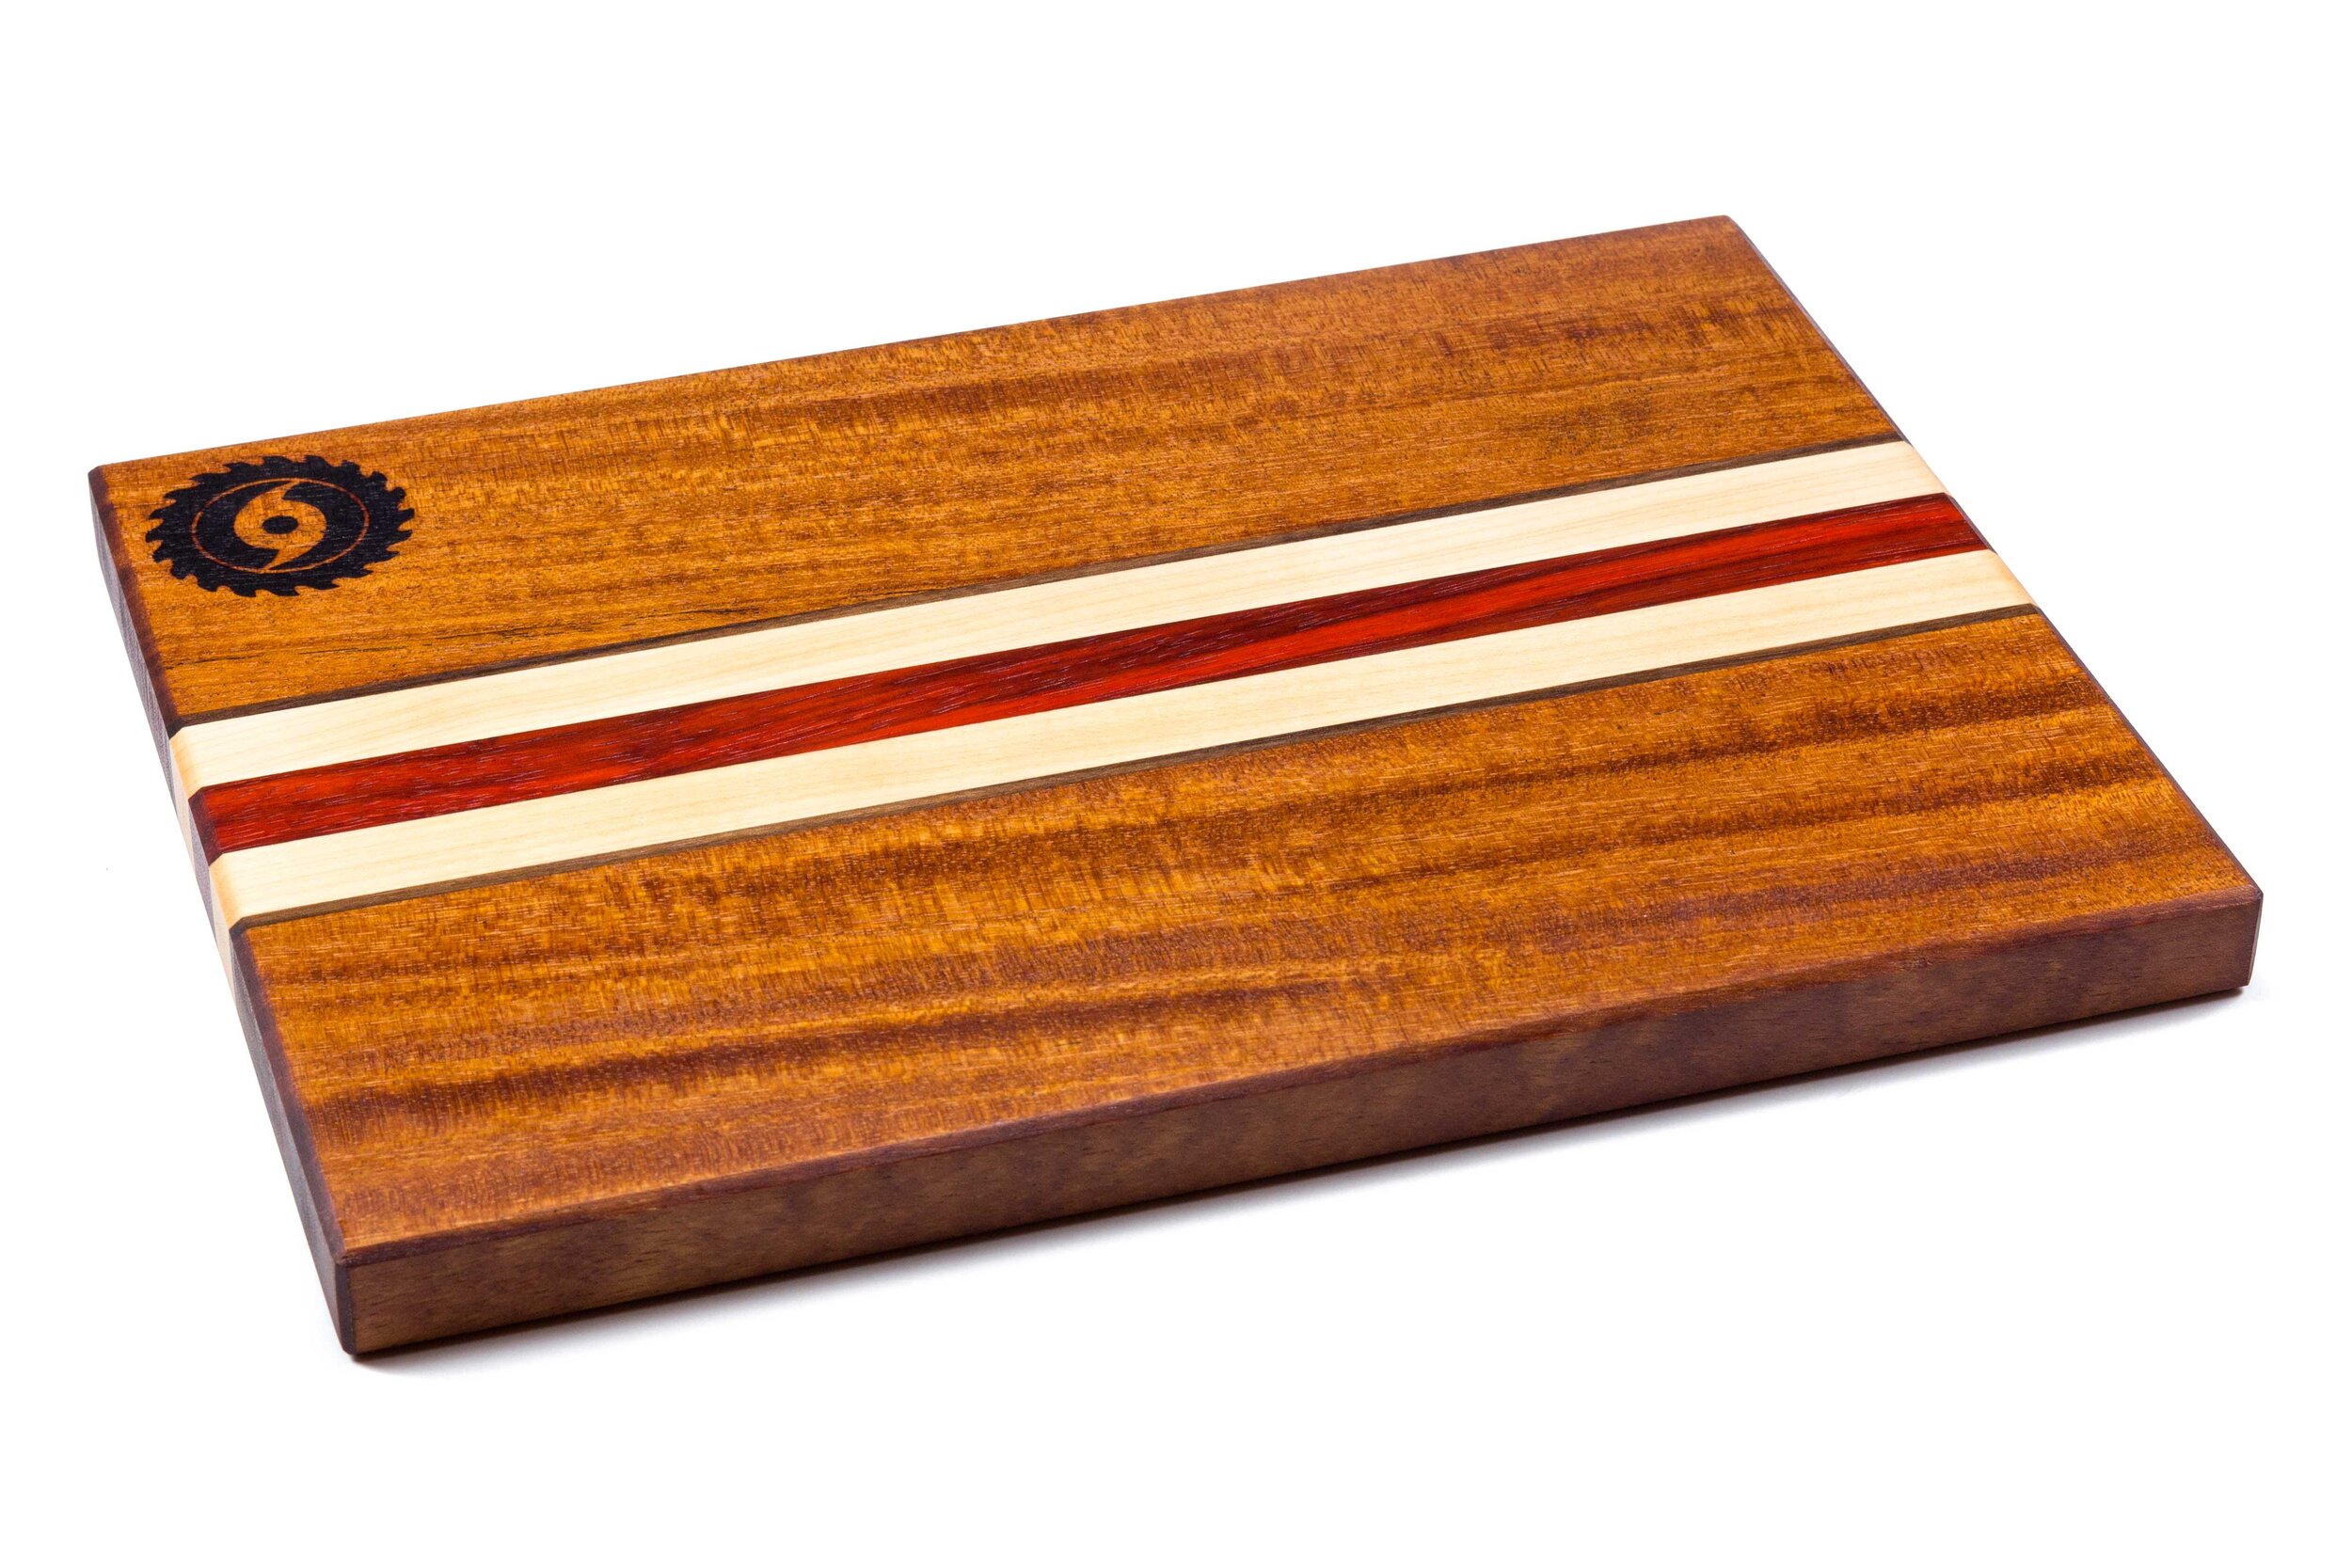 Maple Mahogany cutting board with Petoskey Stone Inlay #22-036